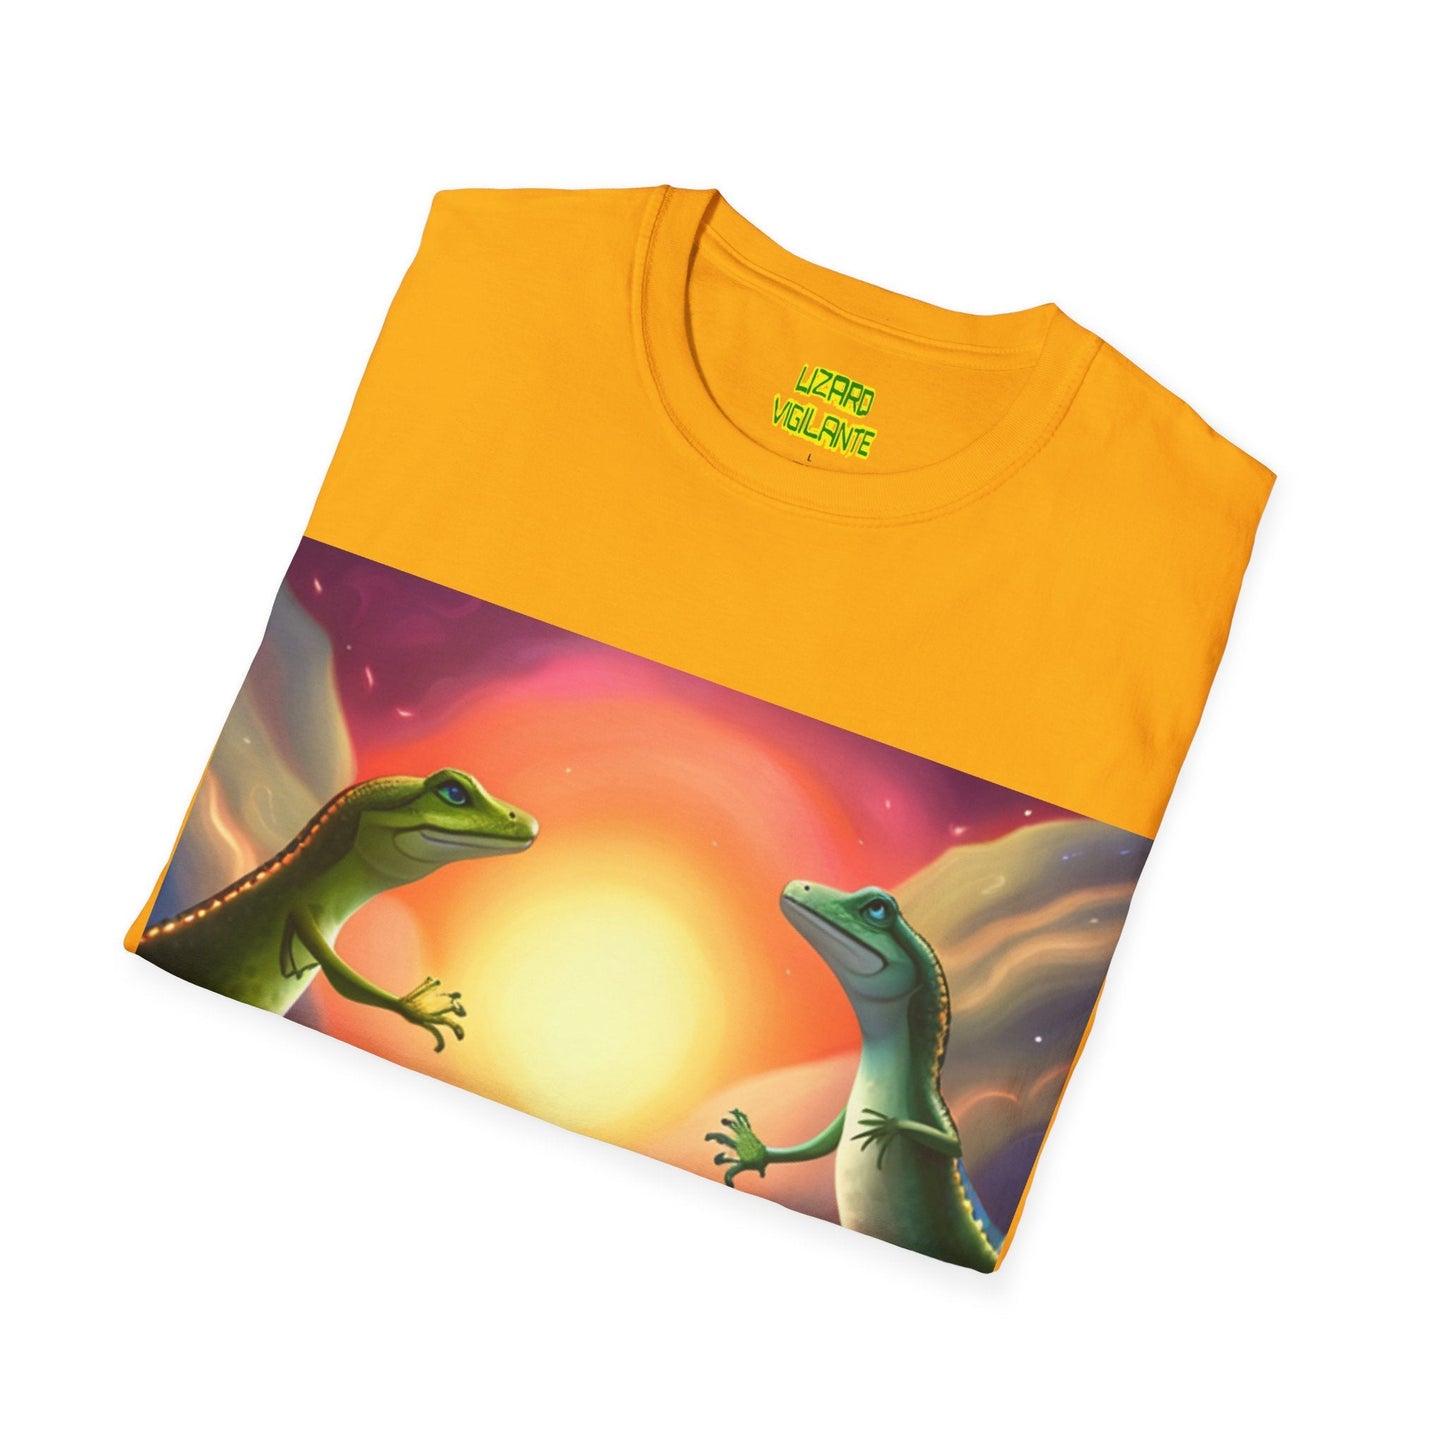 Valentine’s Day Lizard Vigilante Love Unisex Softstyle T-Shirt - Lizard Vigilante